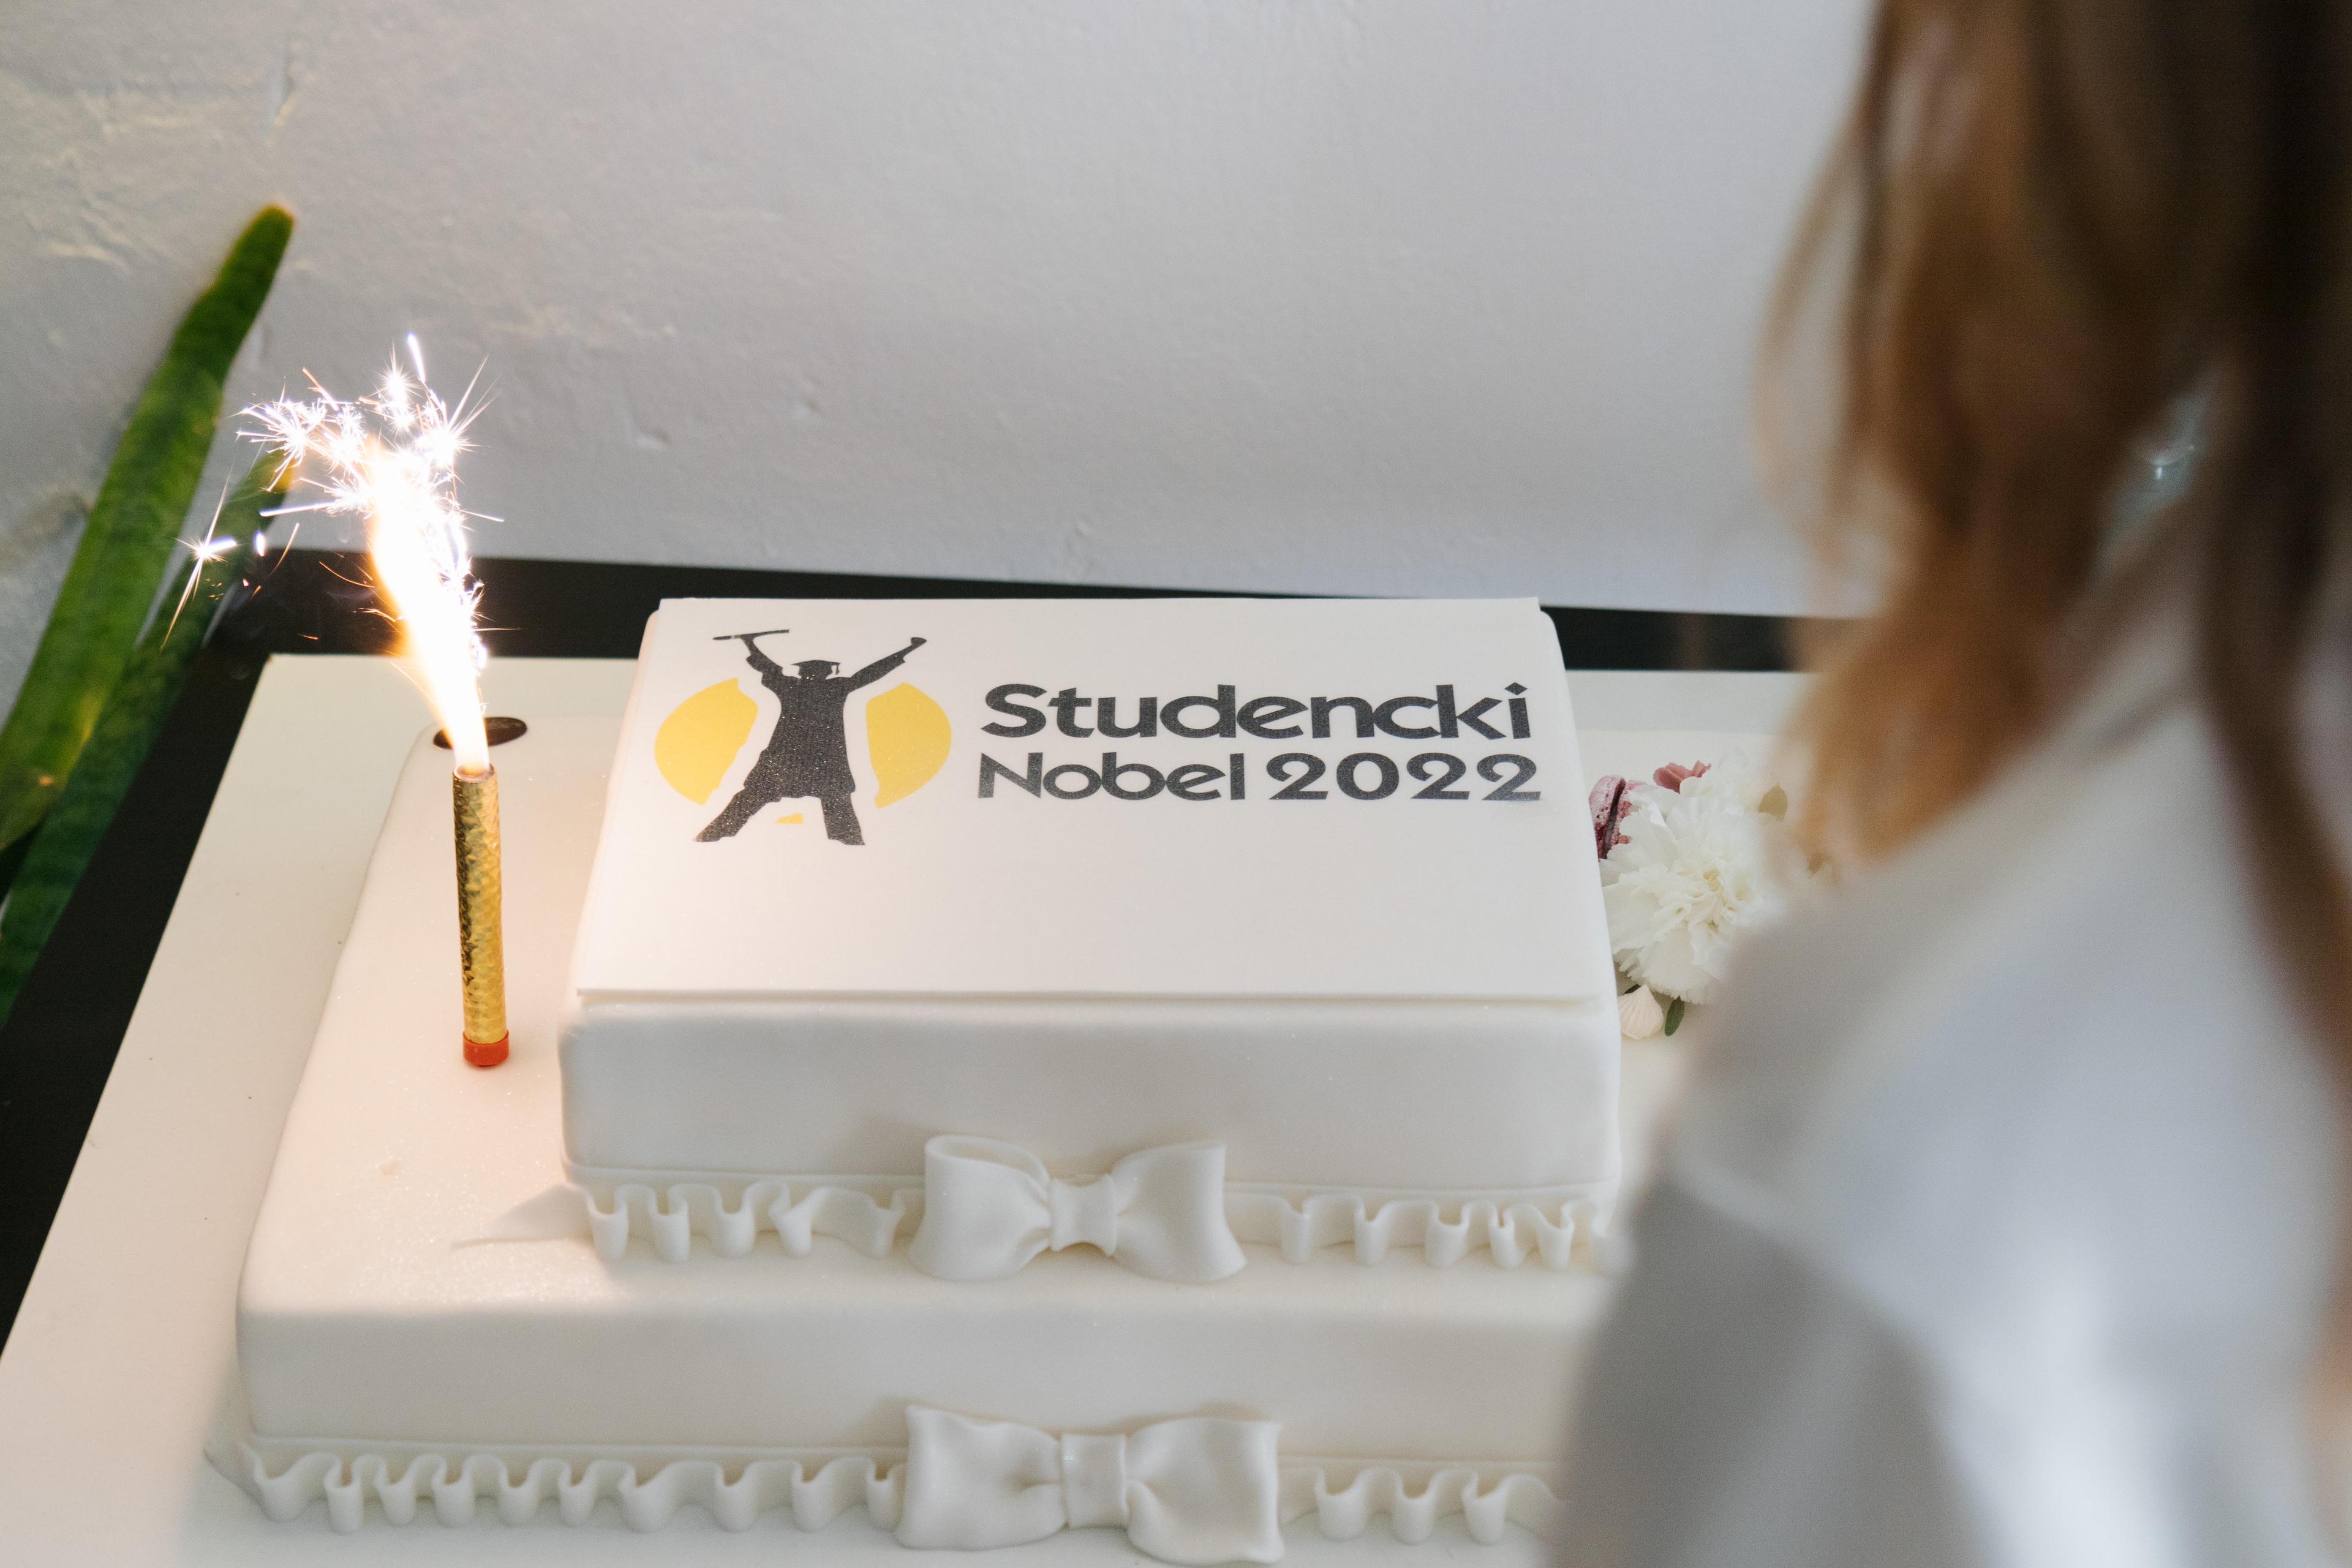 Student Biologii – Finalistą Konkursu „Studencki Nobel 2022”